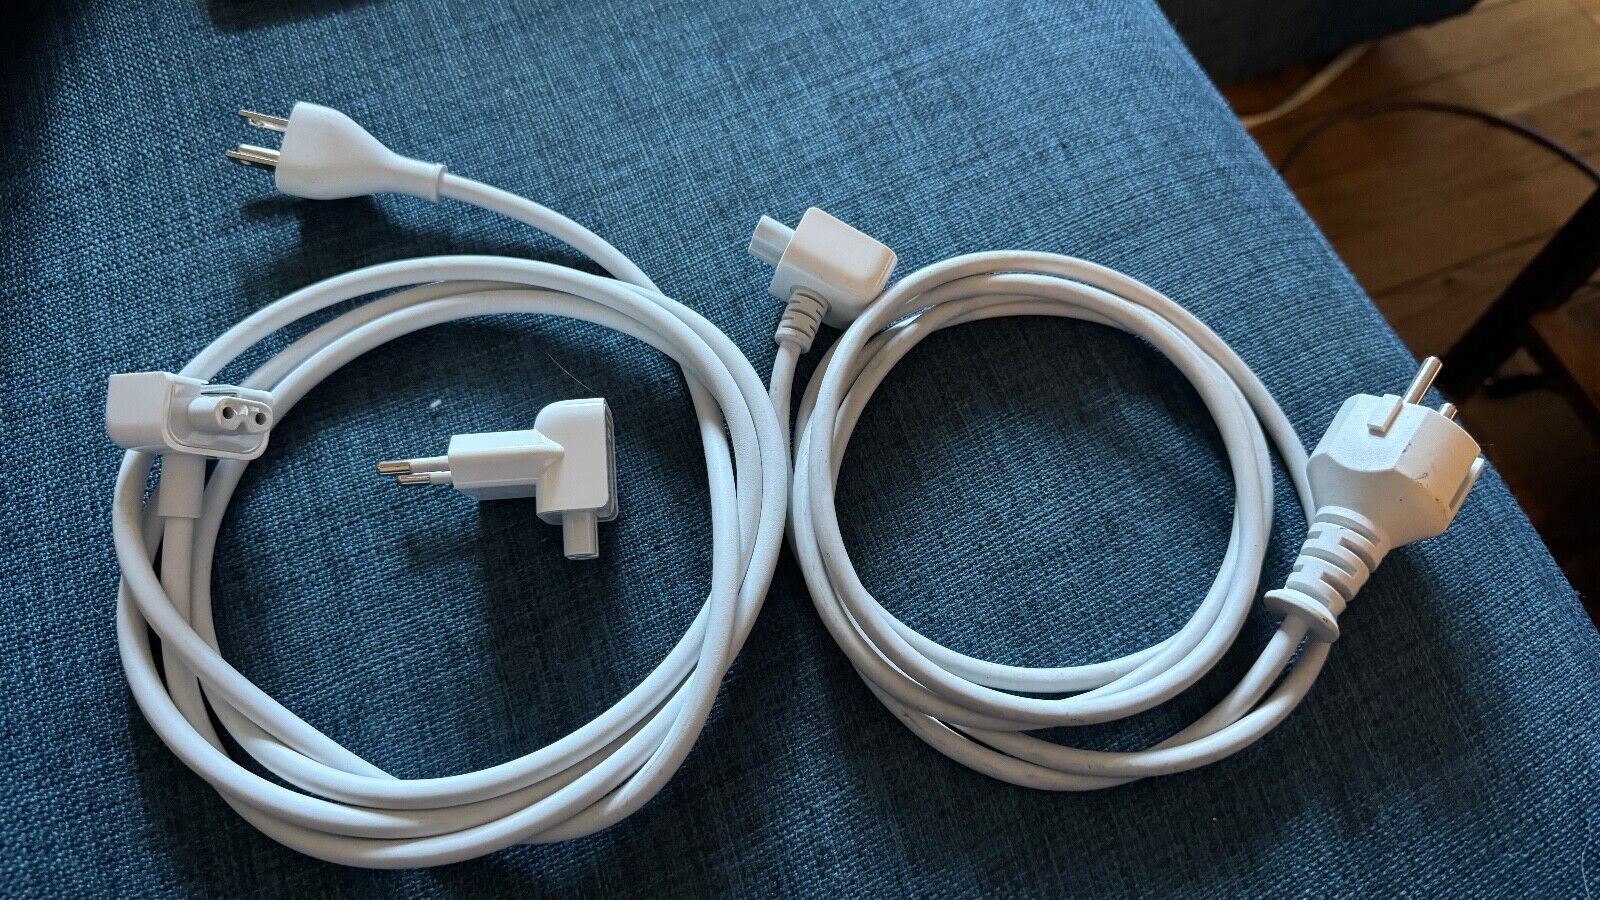 APPLE OEM Power Extension Cables 6ft for Macbook, Macbook Air US/EU Bundle